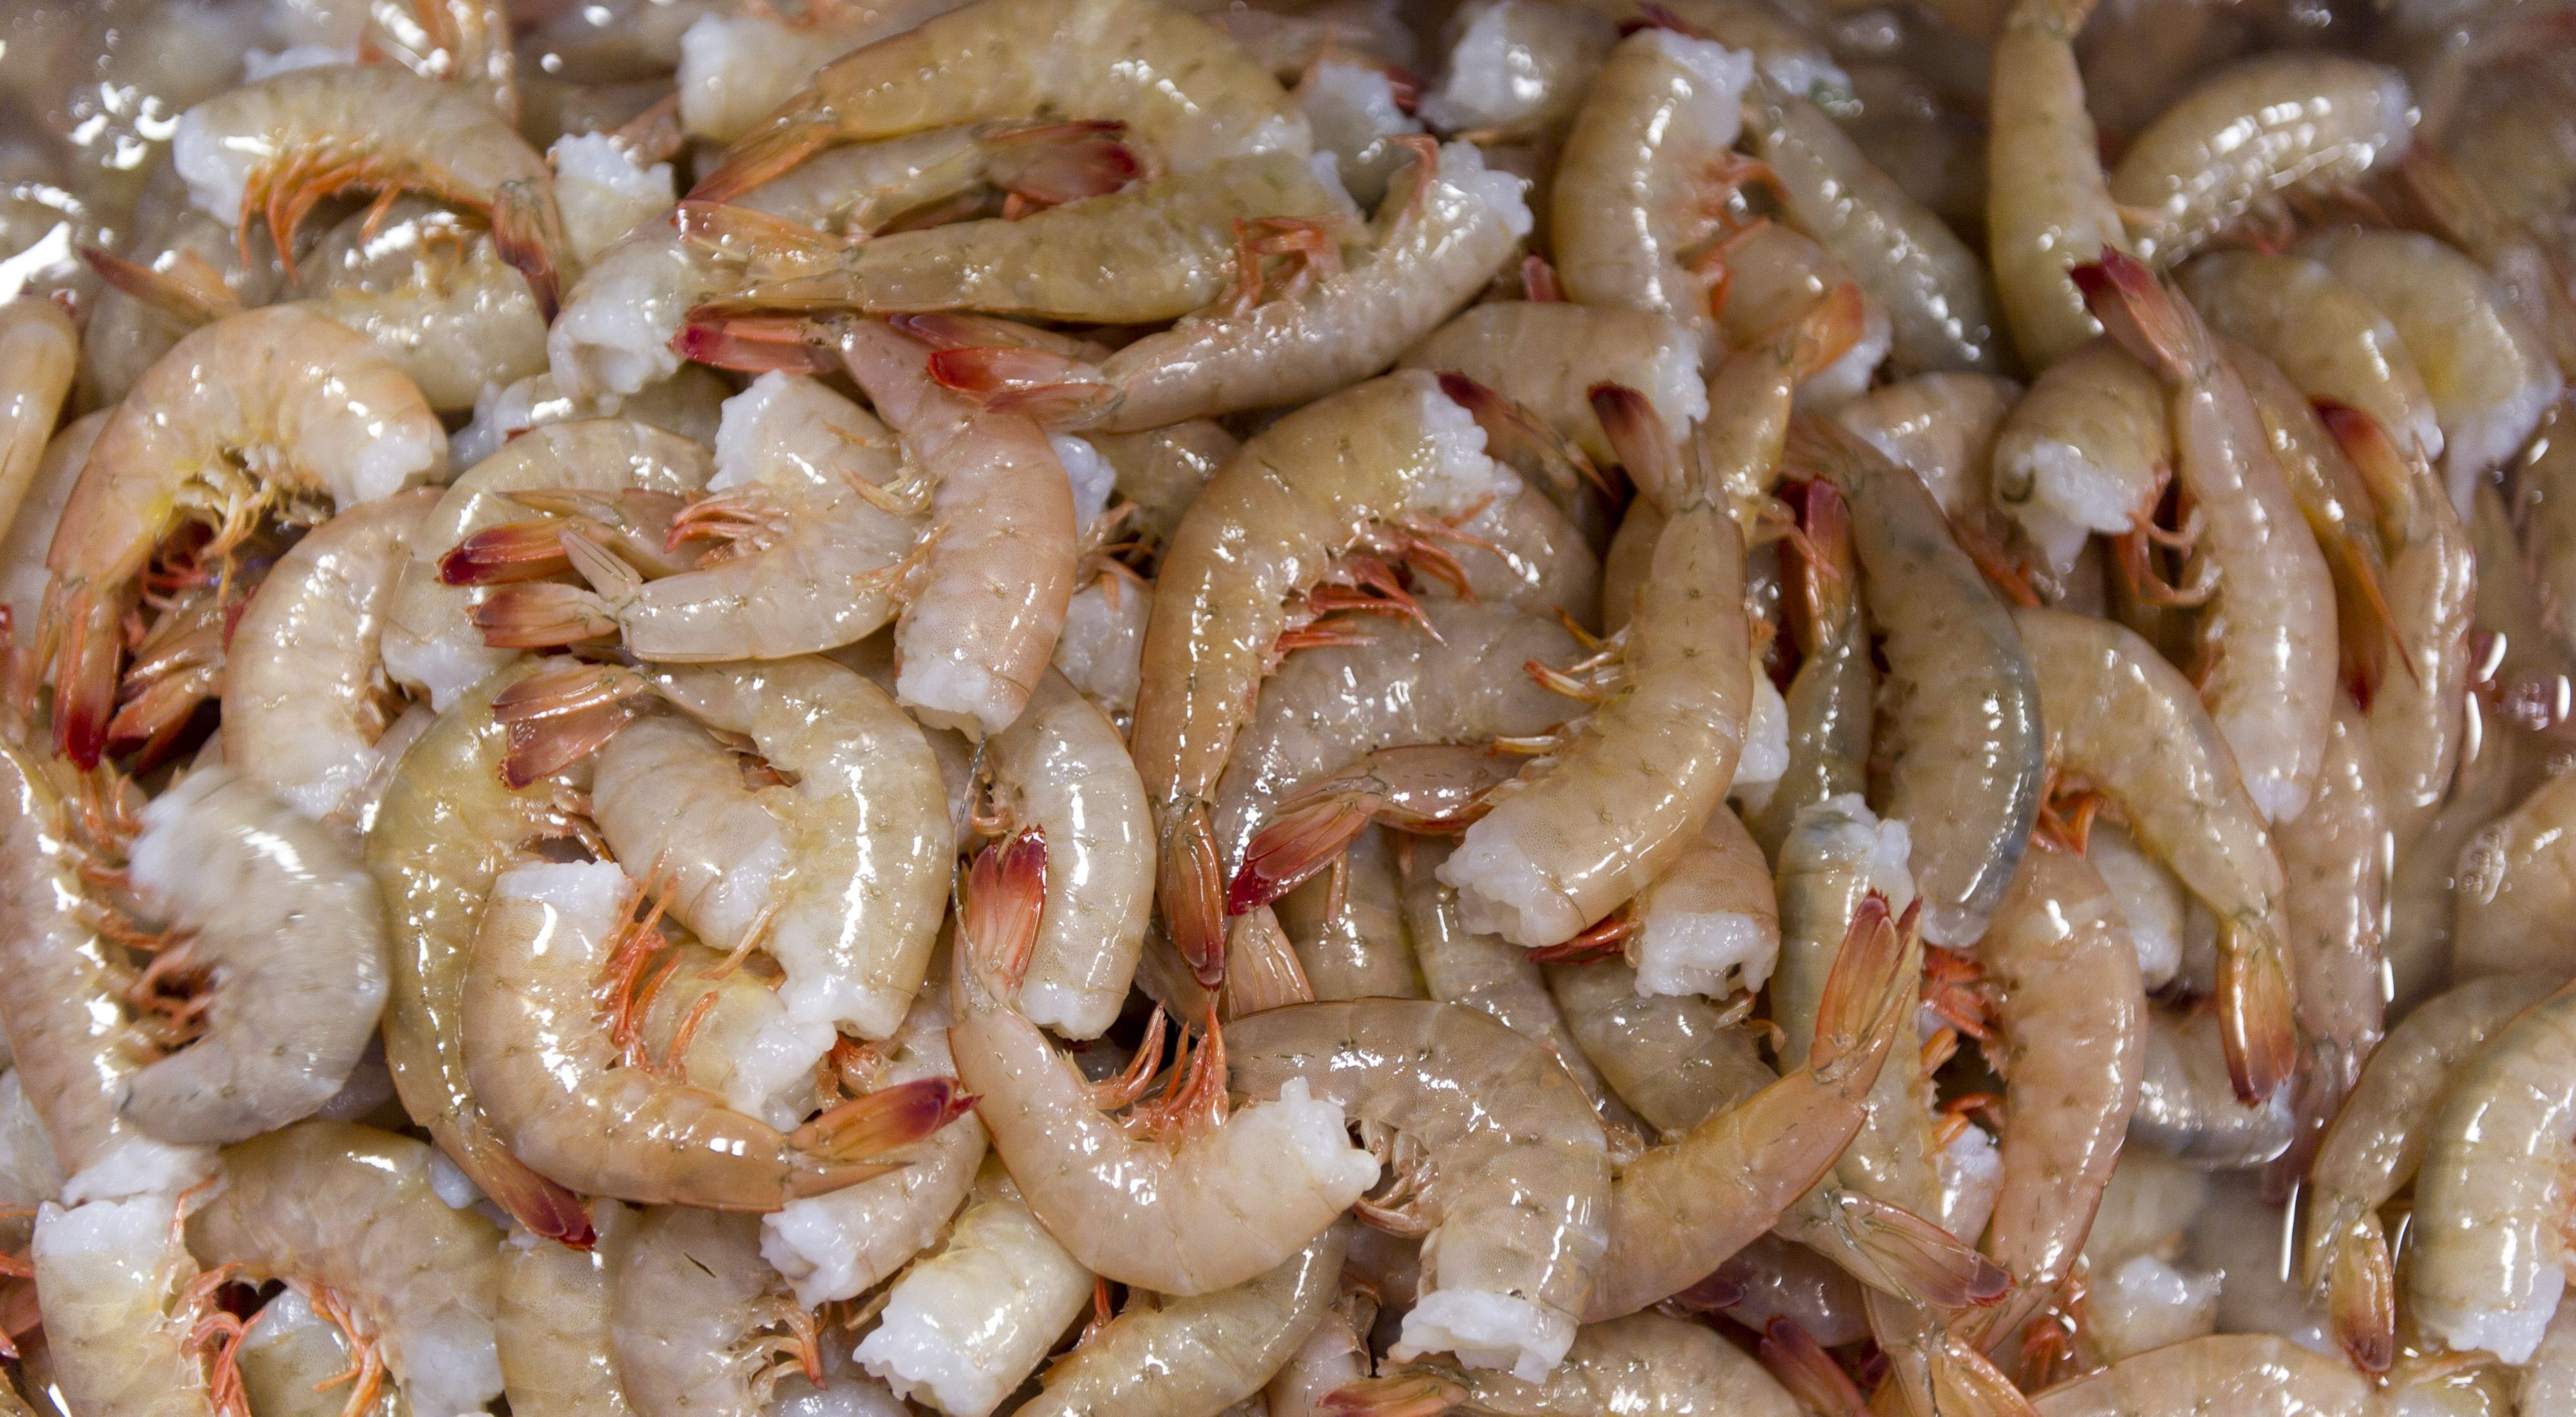 A pile of shrimp await processing.